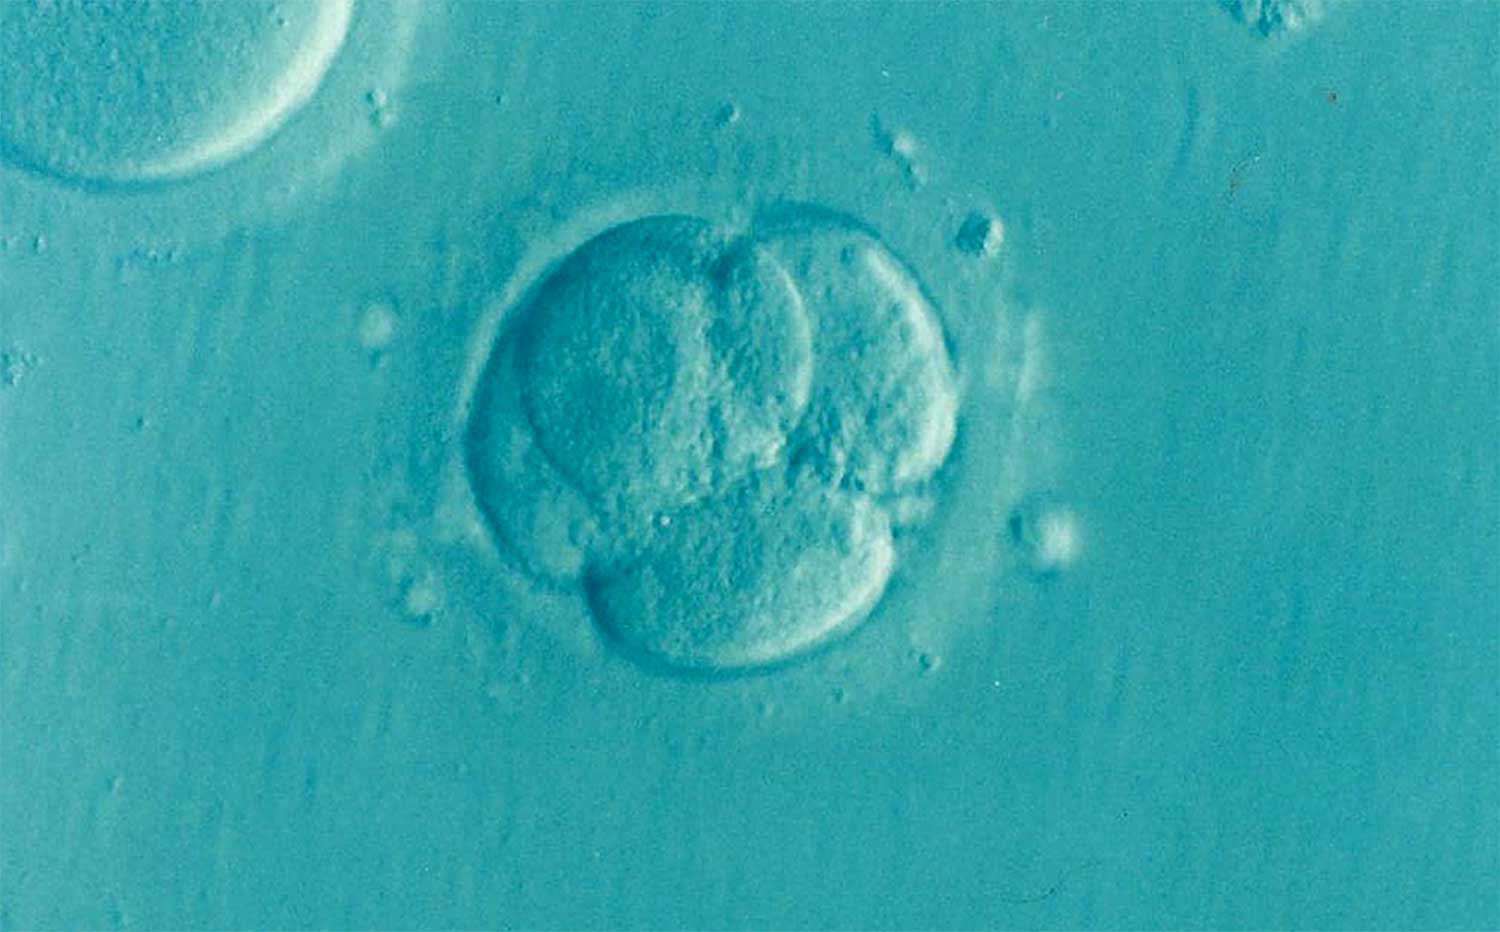  Embryo